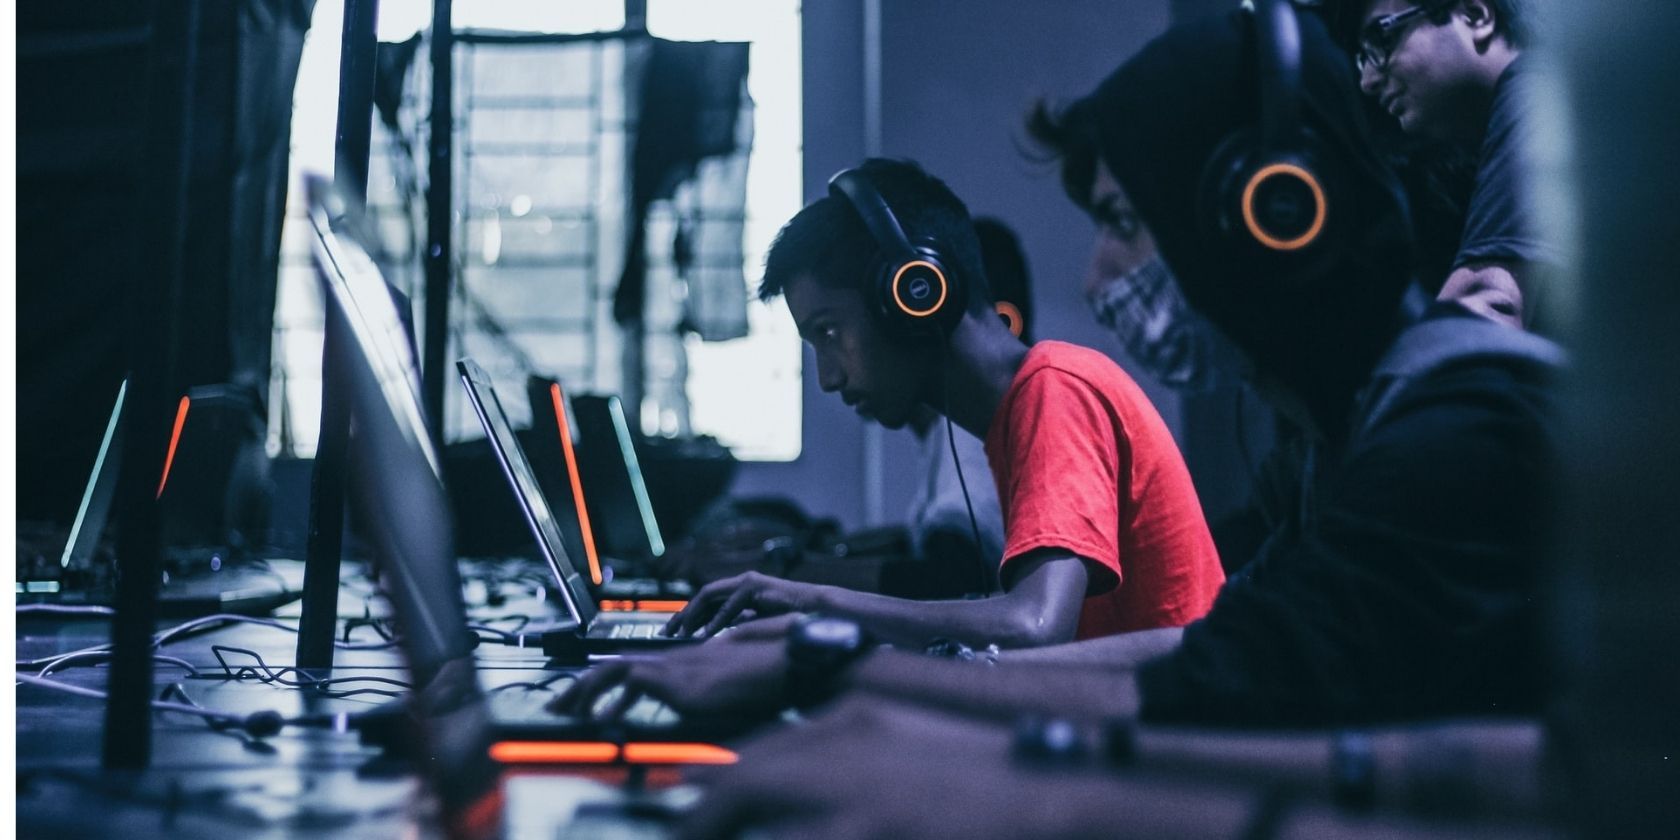 cybersecurity gamers on laptops in headphones